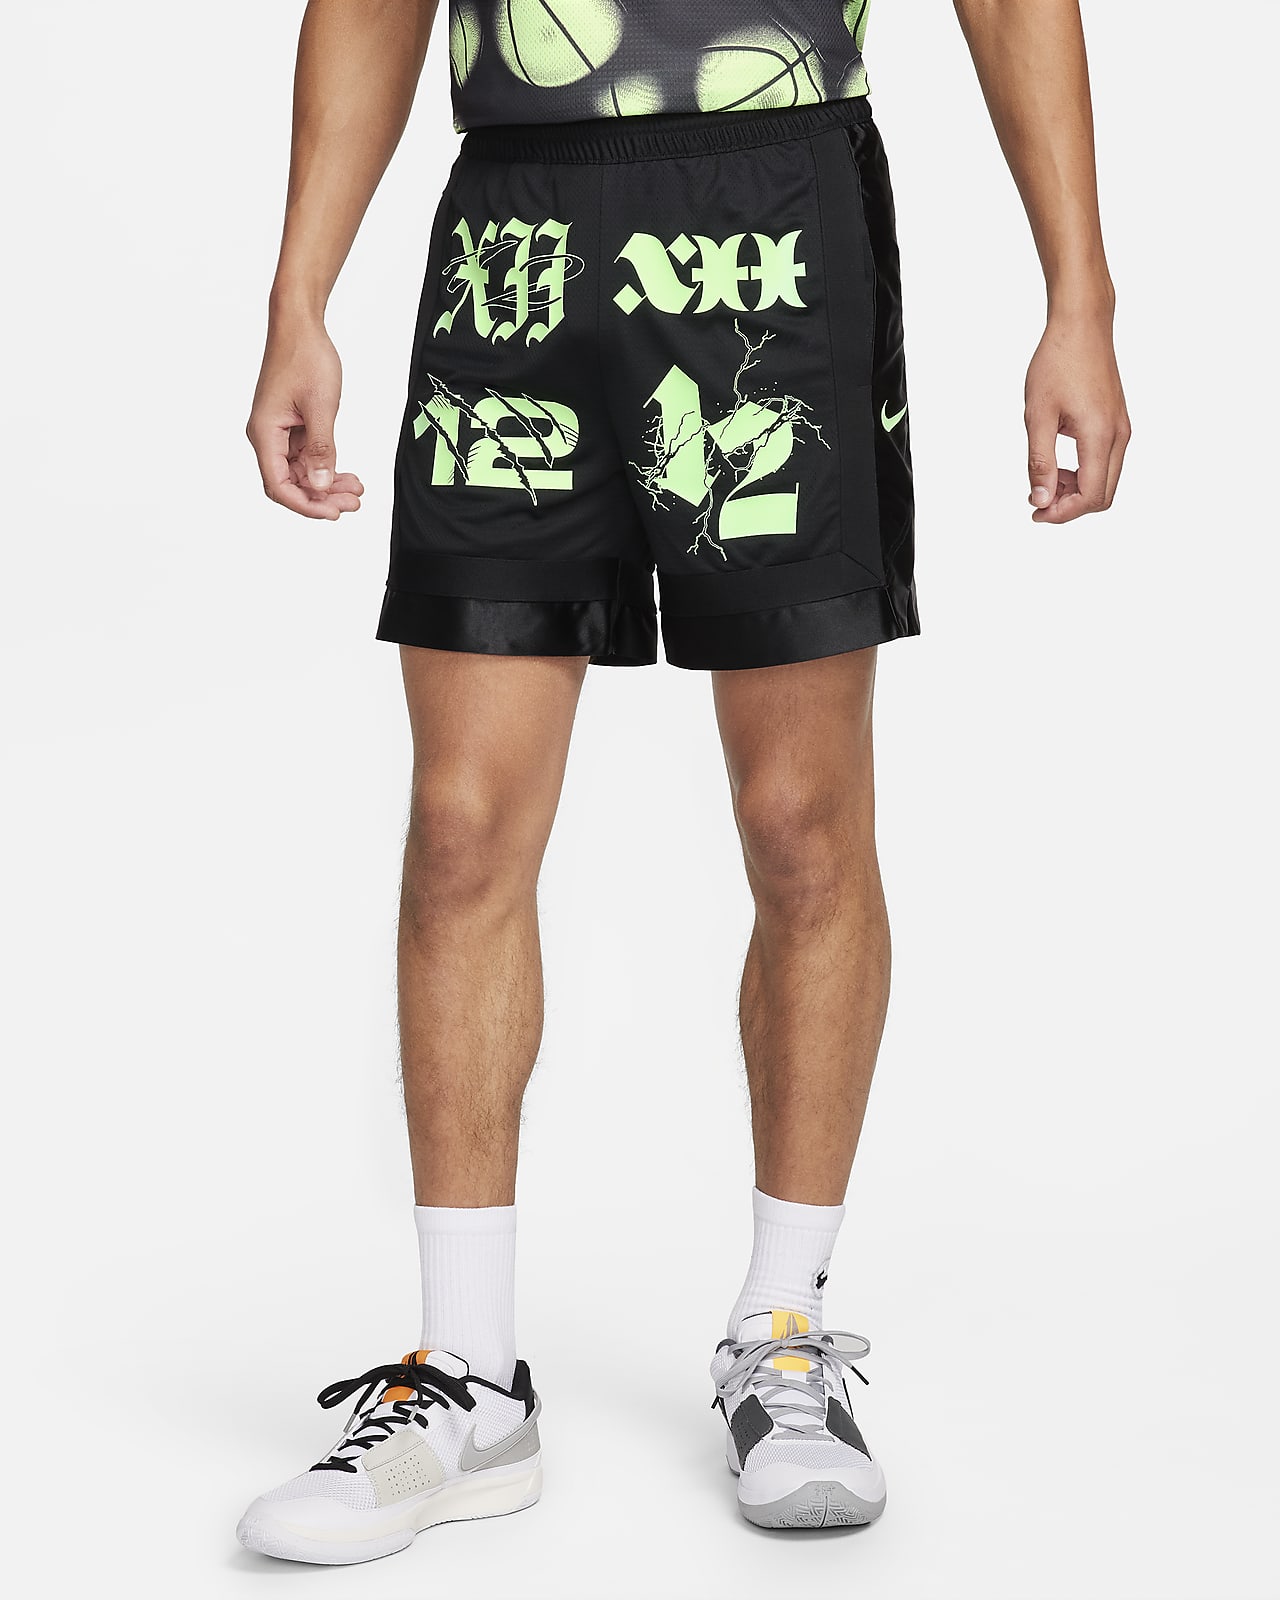 JA Men's Dri-FIT DNA 15cm (approx.) Basketball Shorts